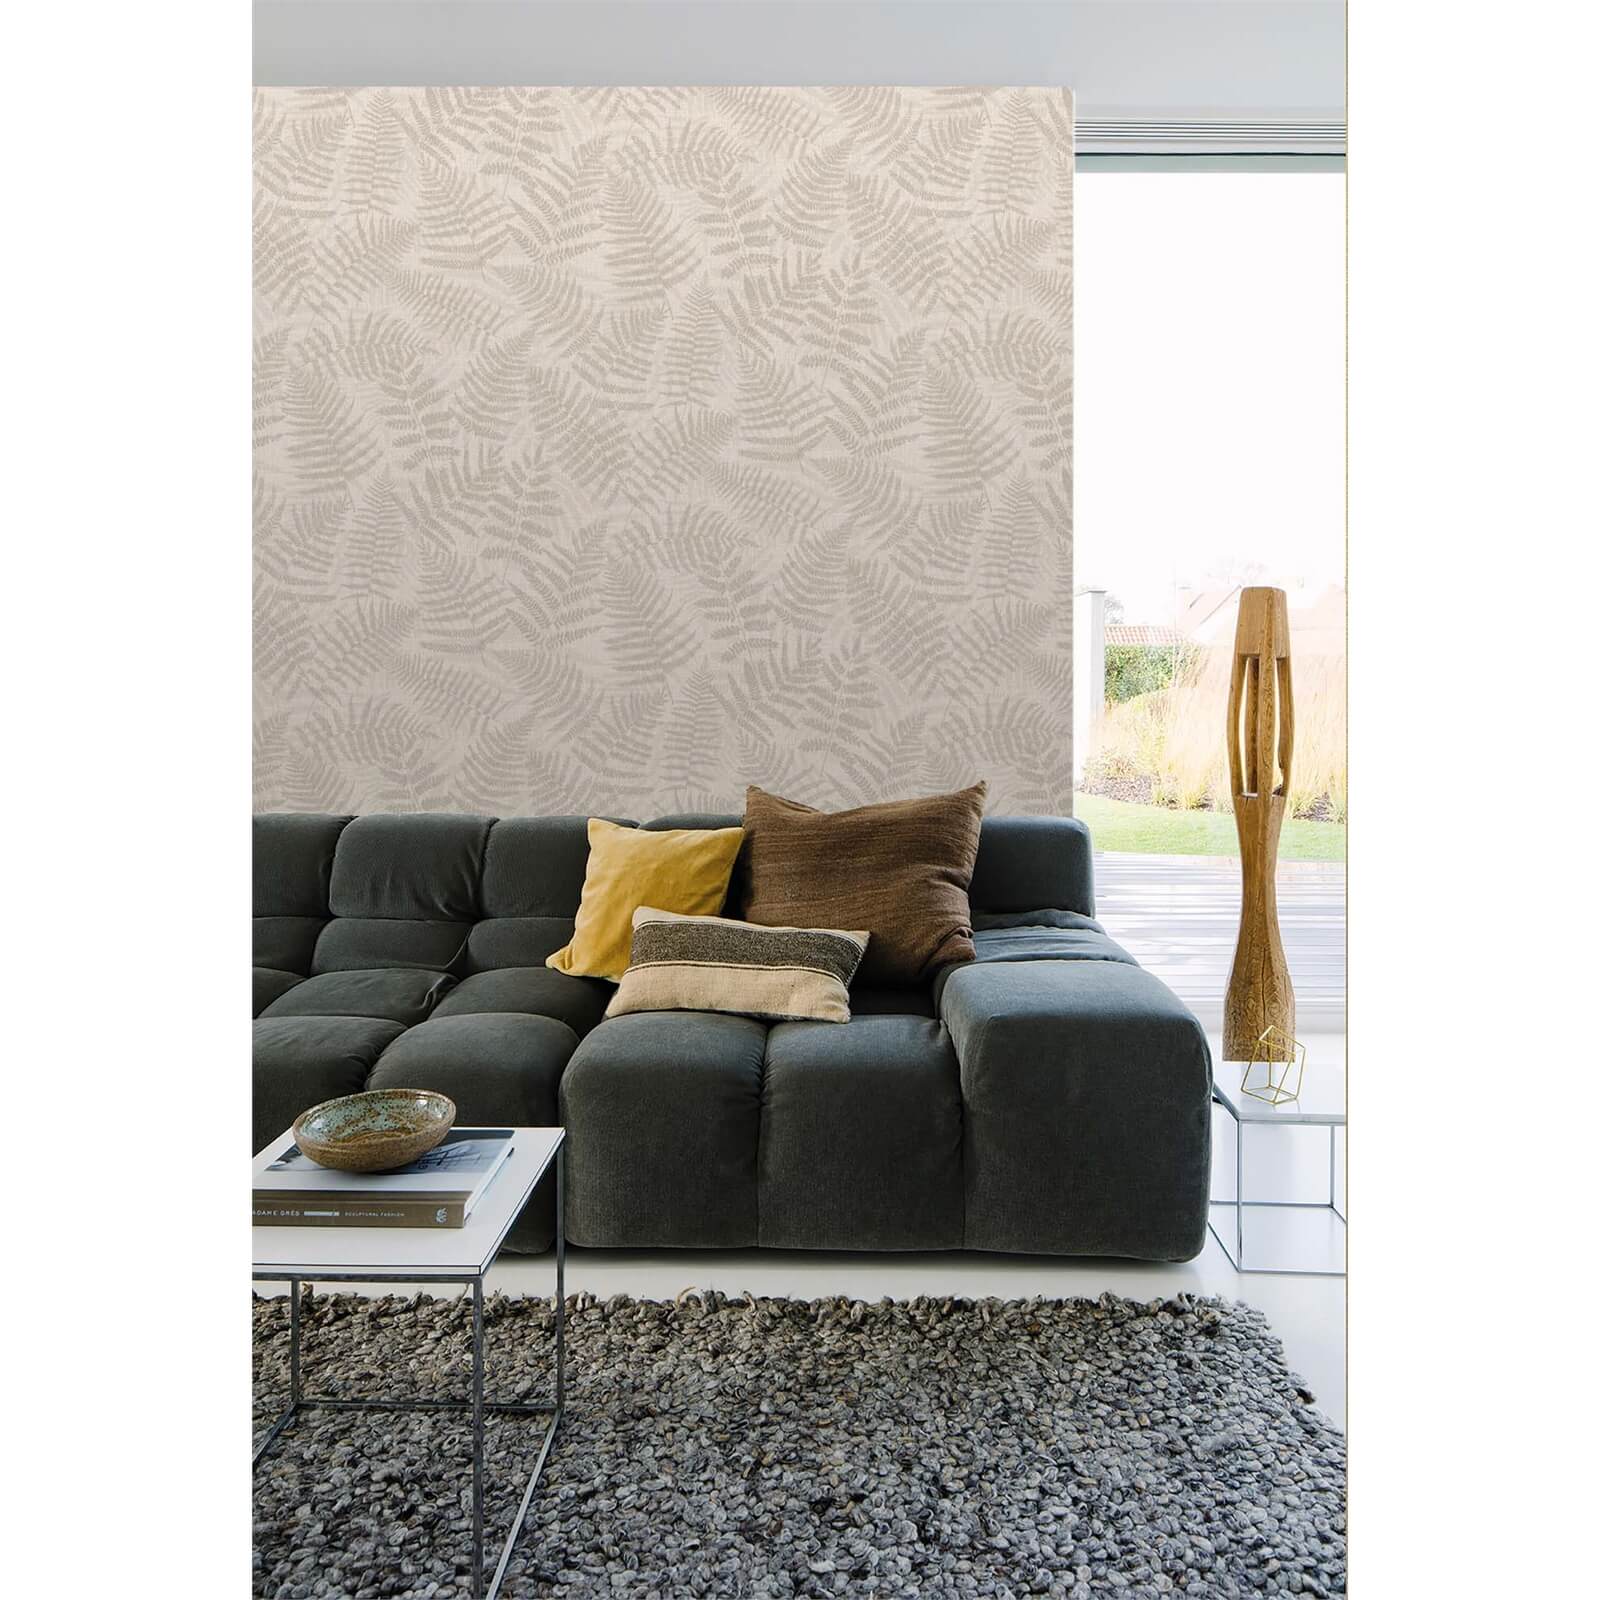 Grandeco Metallic Fern Taupe Wallpaper